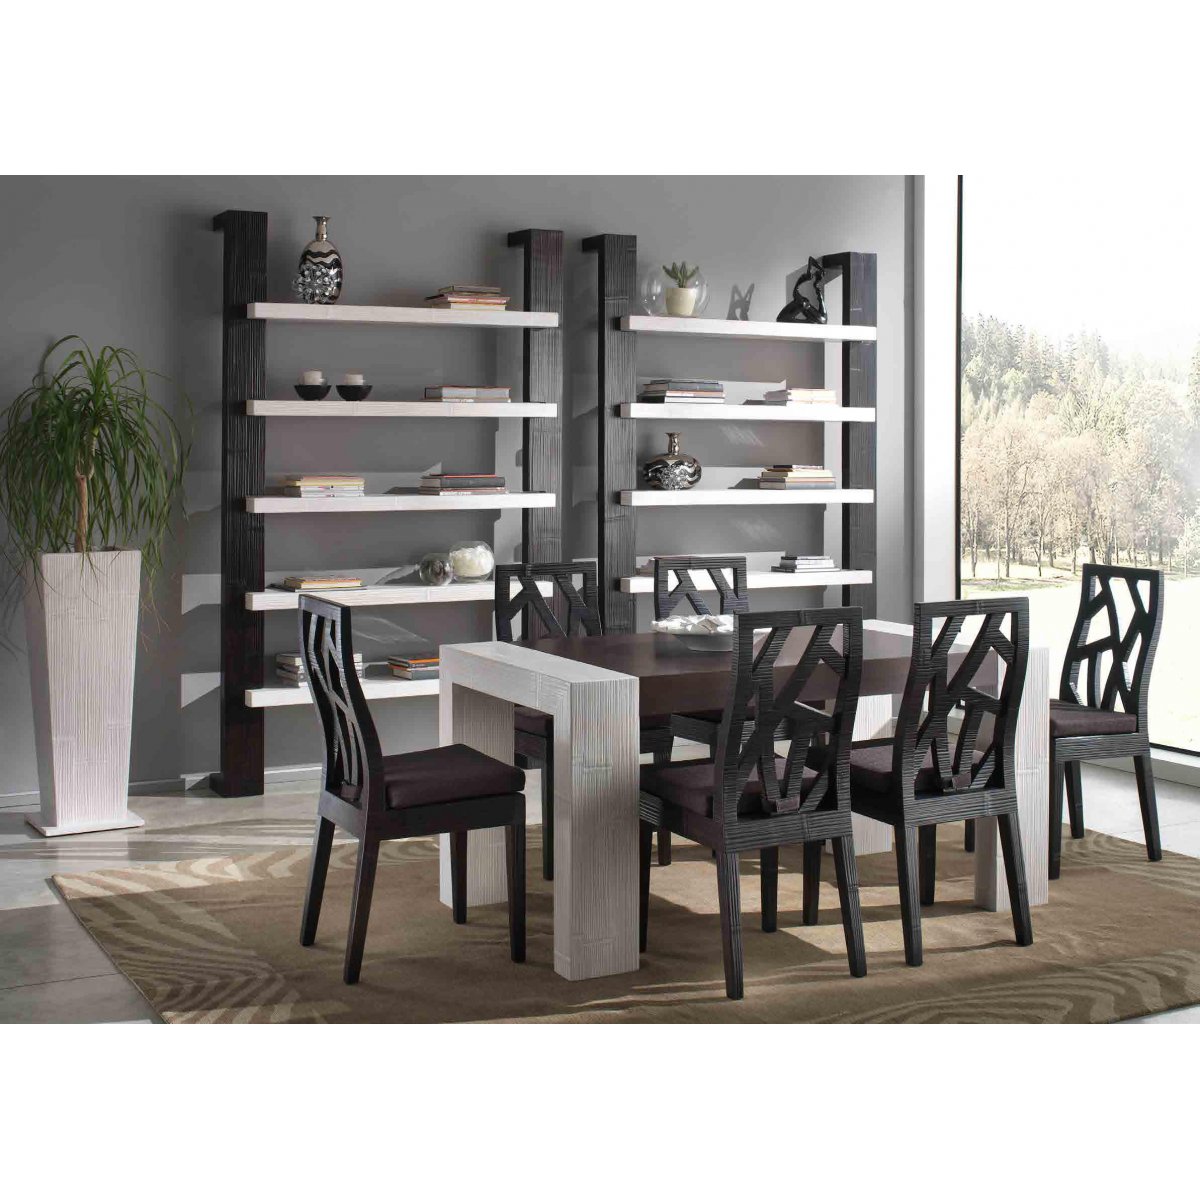 tavolo Stone allungabile, sedia light, moduli motanti laterali Light. mensole Essential